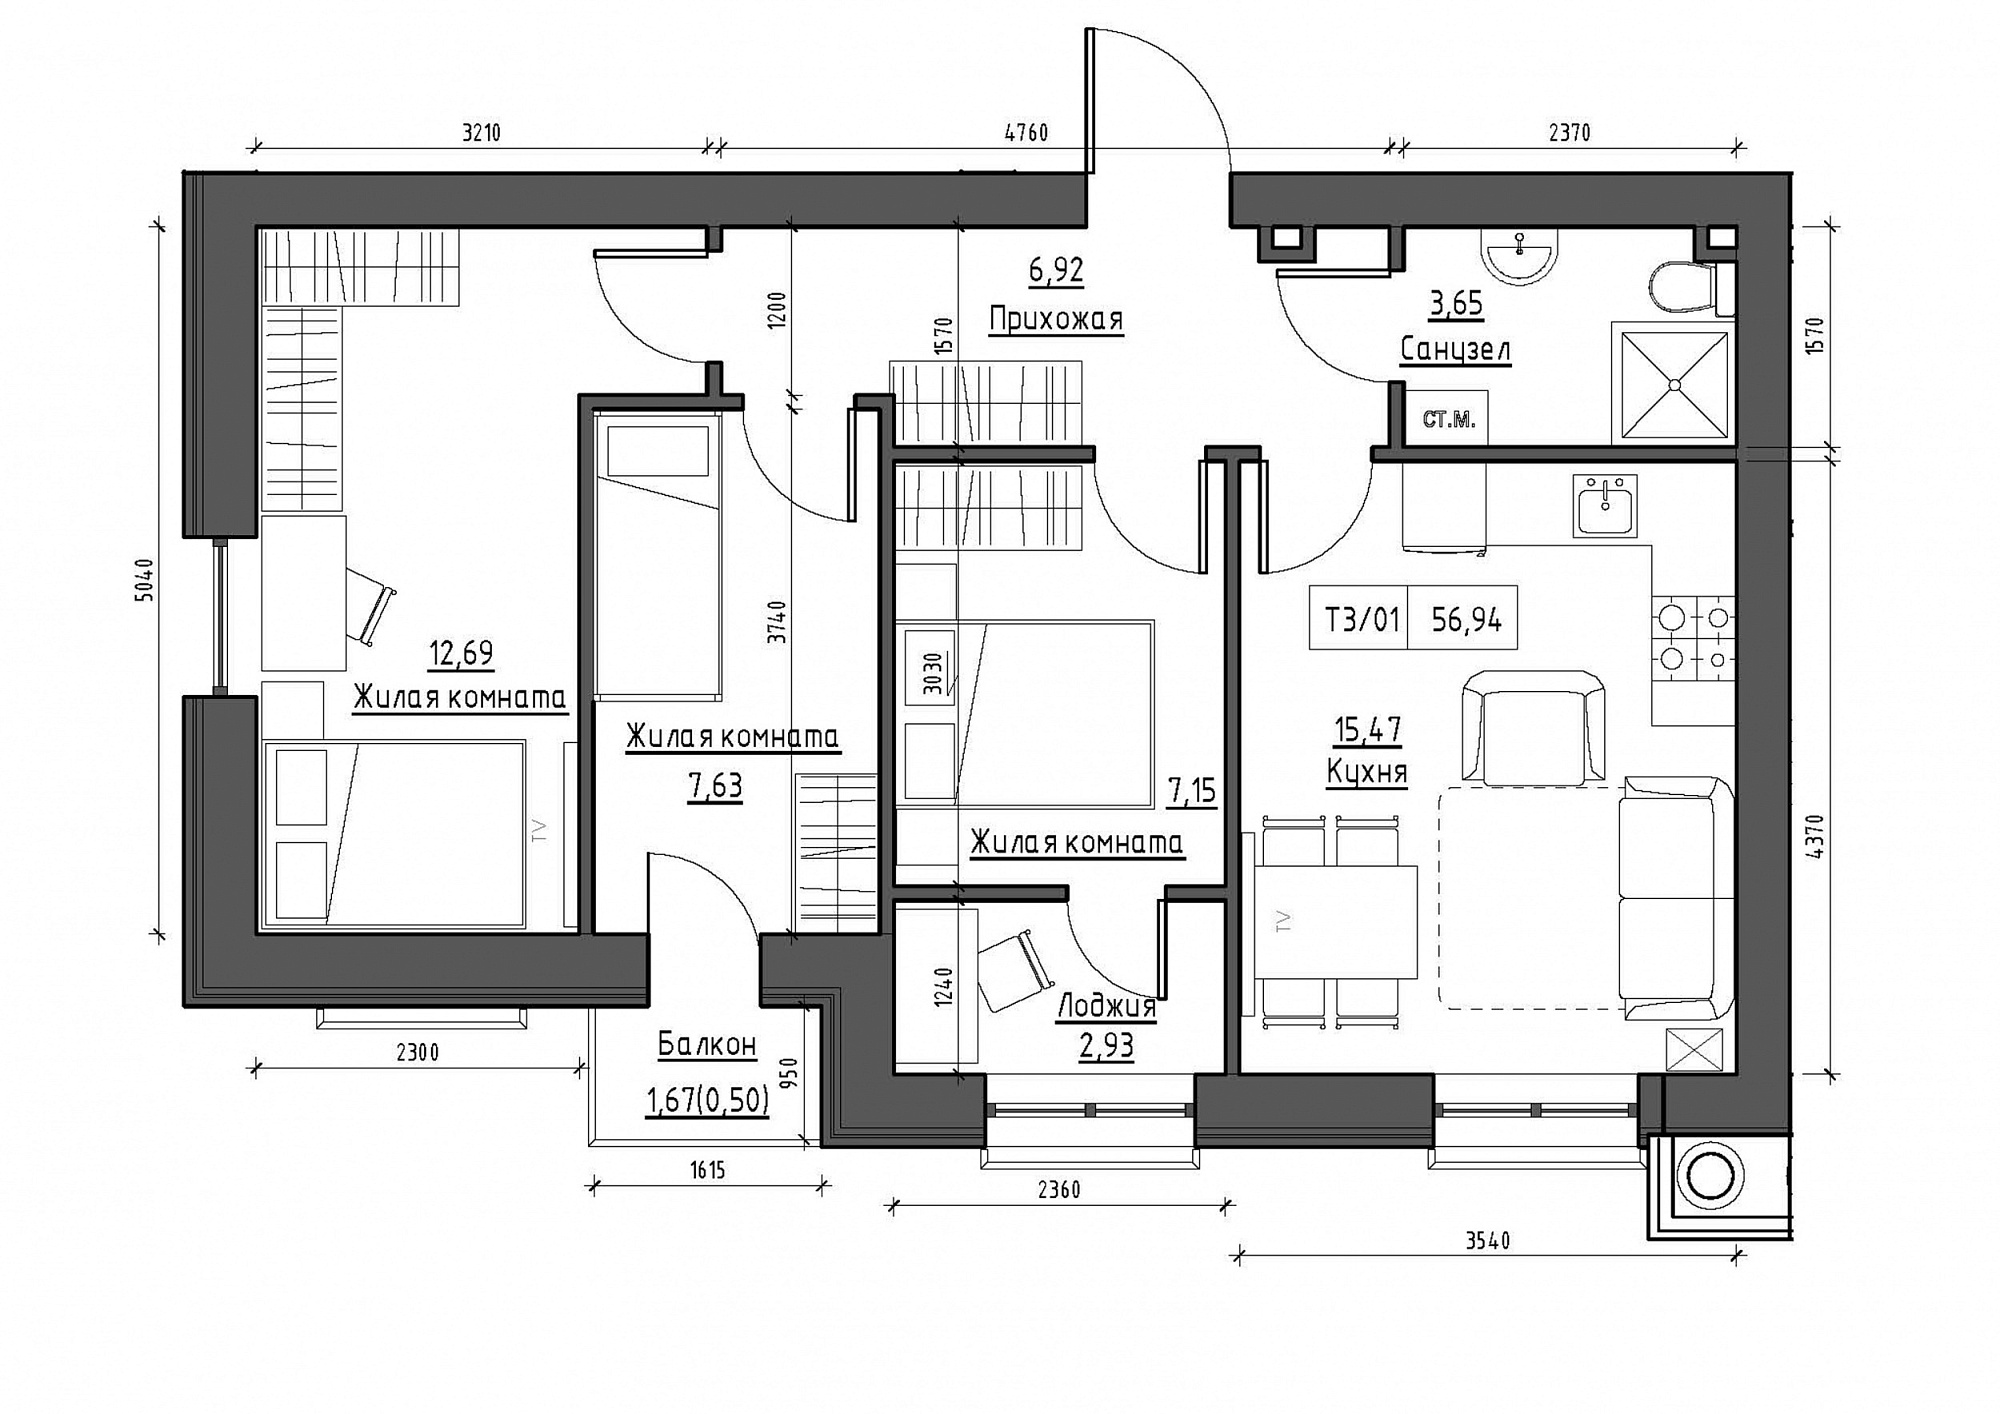 Planning 3-rm flats area 56.94m2, KS-012-02/0008.